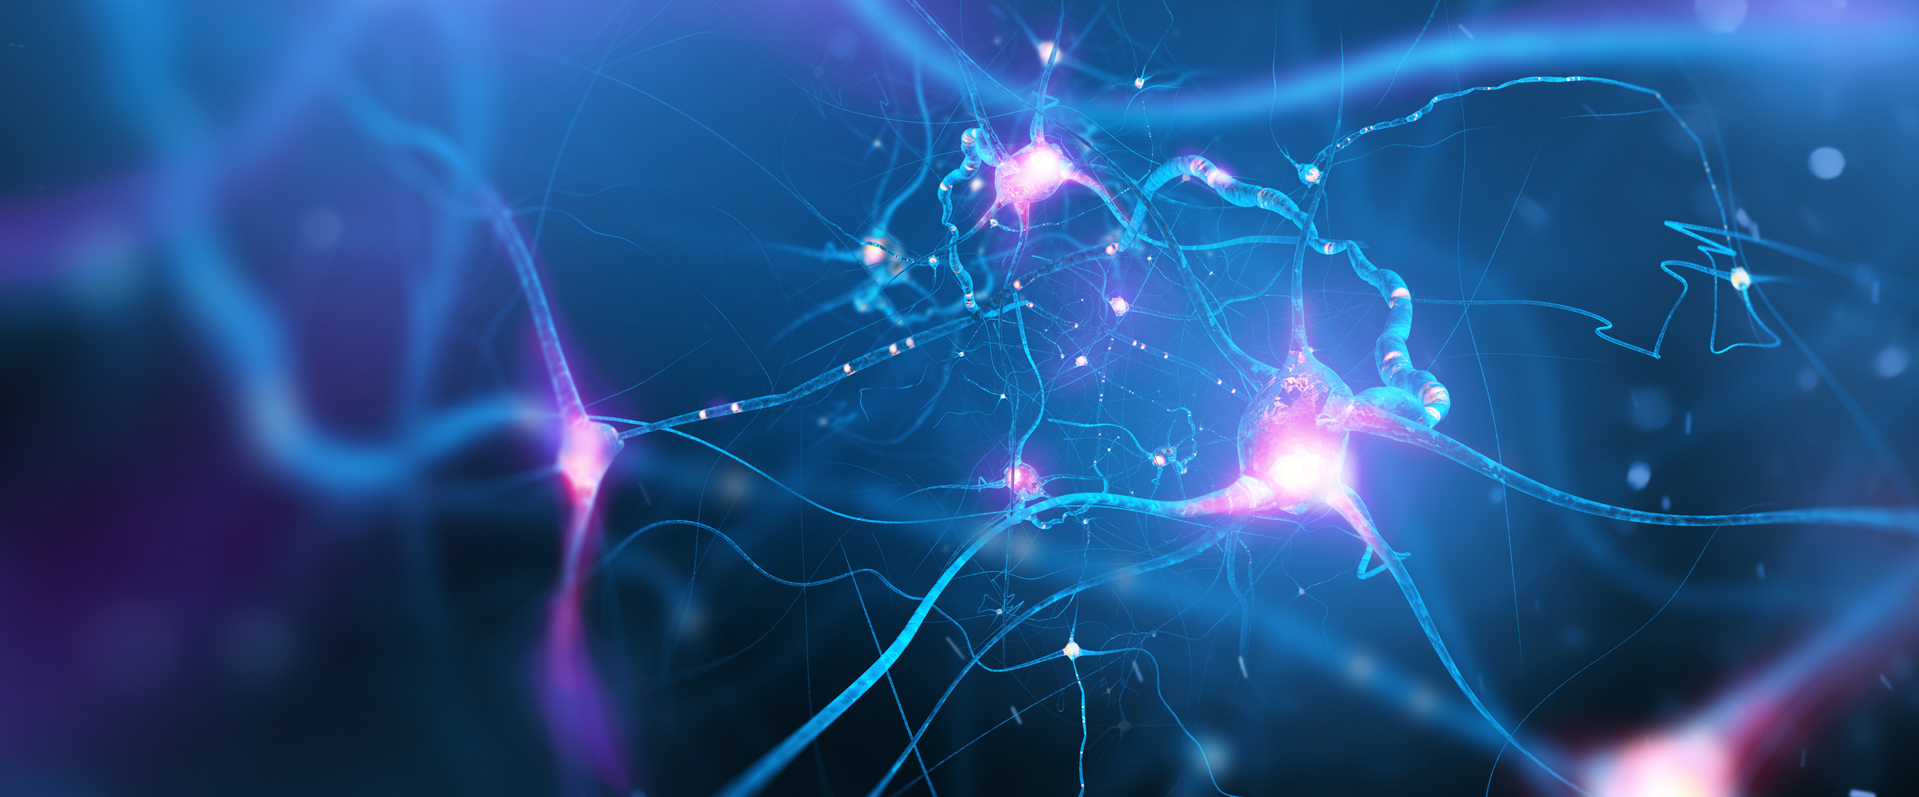 TCCI 在Nature Review Bioengineering发表主题为神经技术转化的论文